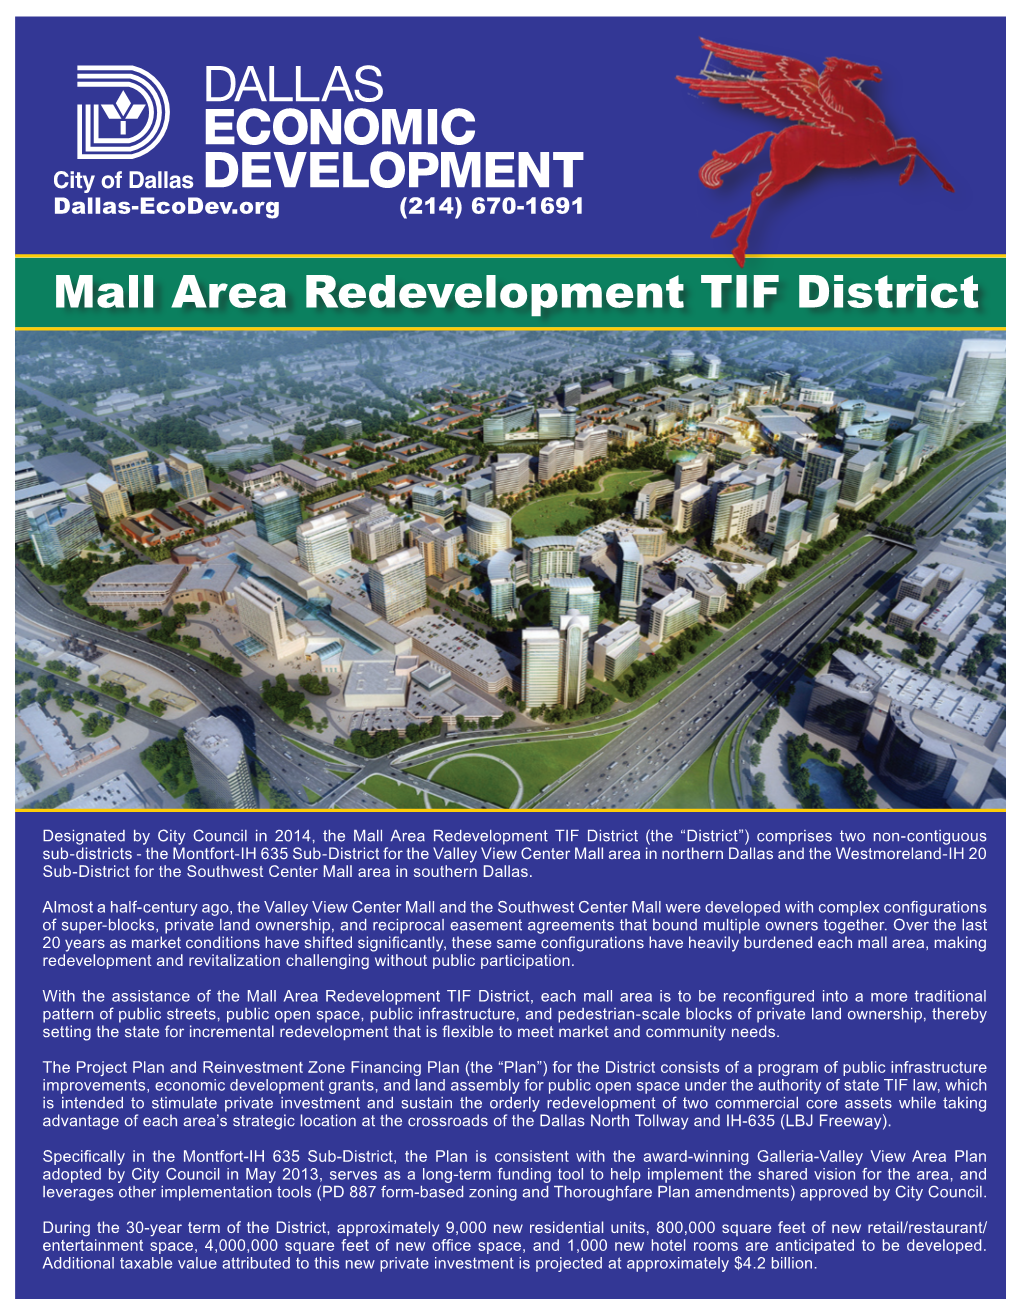 Mall Area Redevelopment TIF District Brochure